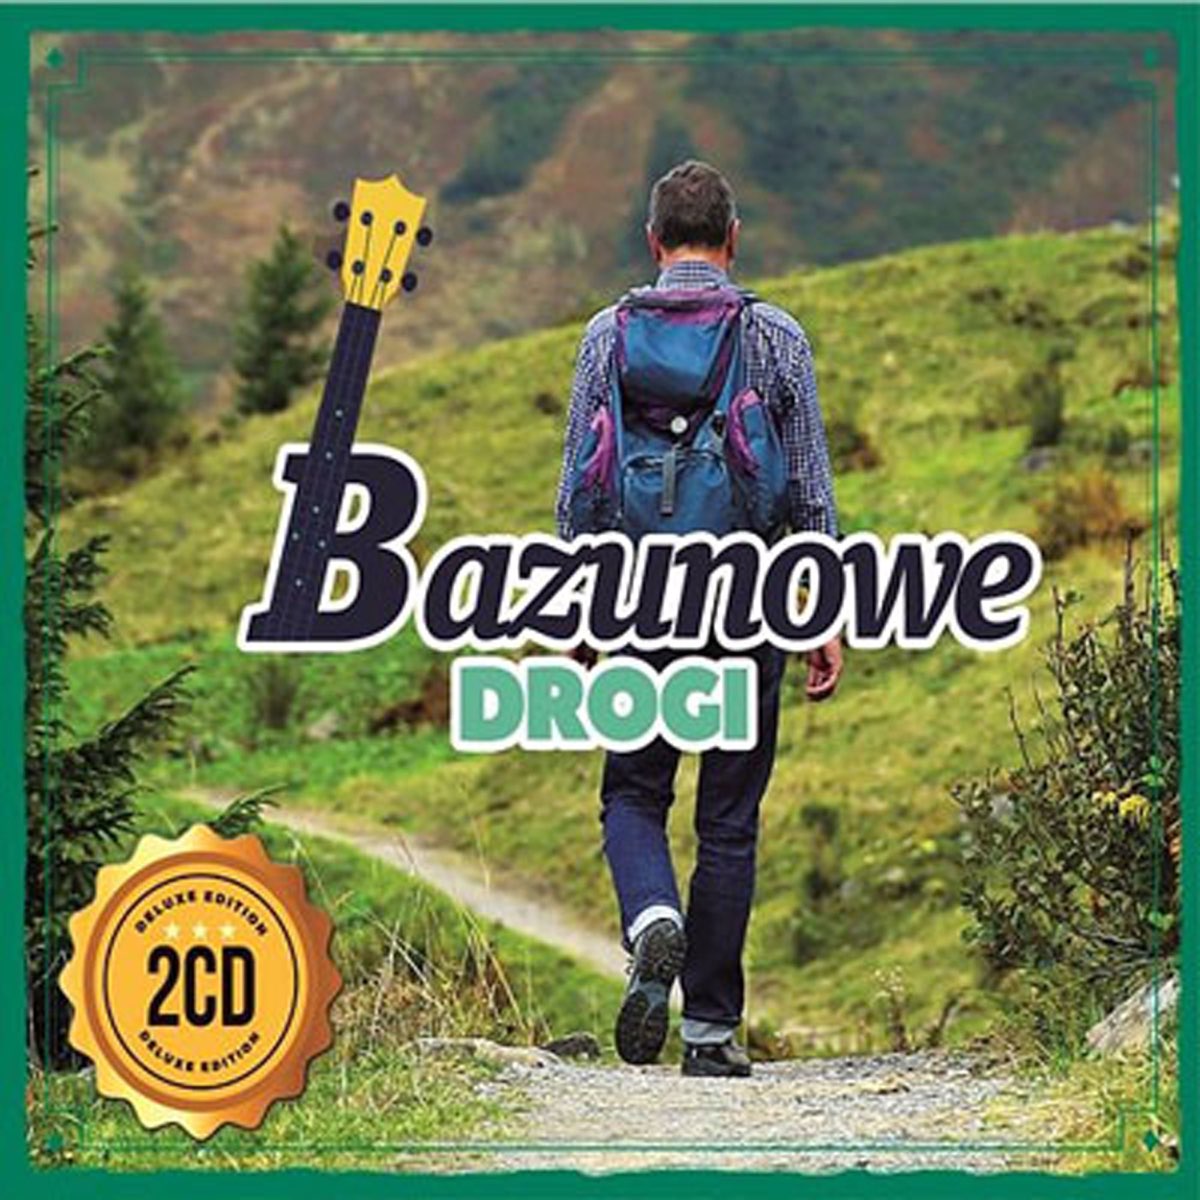 Bazunowe Drogi by Various Artists on Apple Music